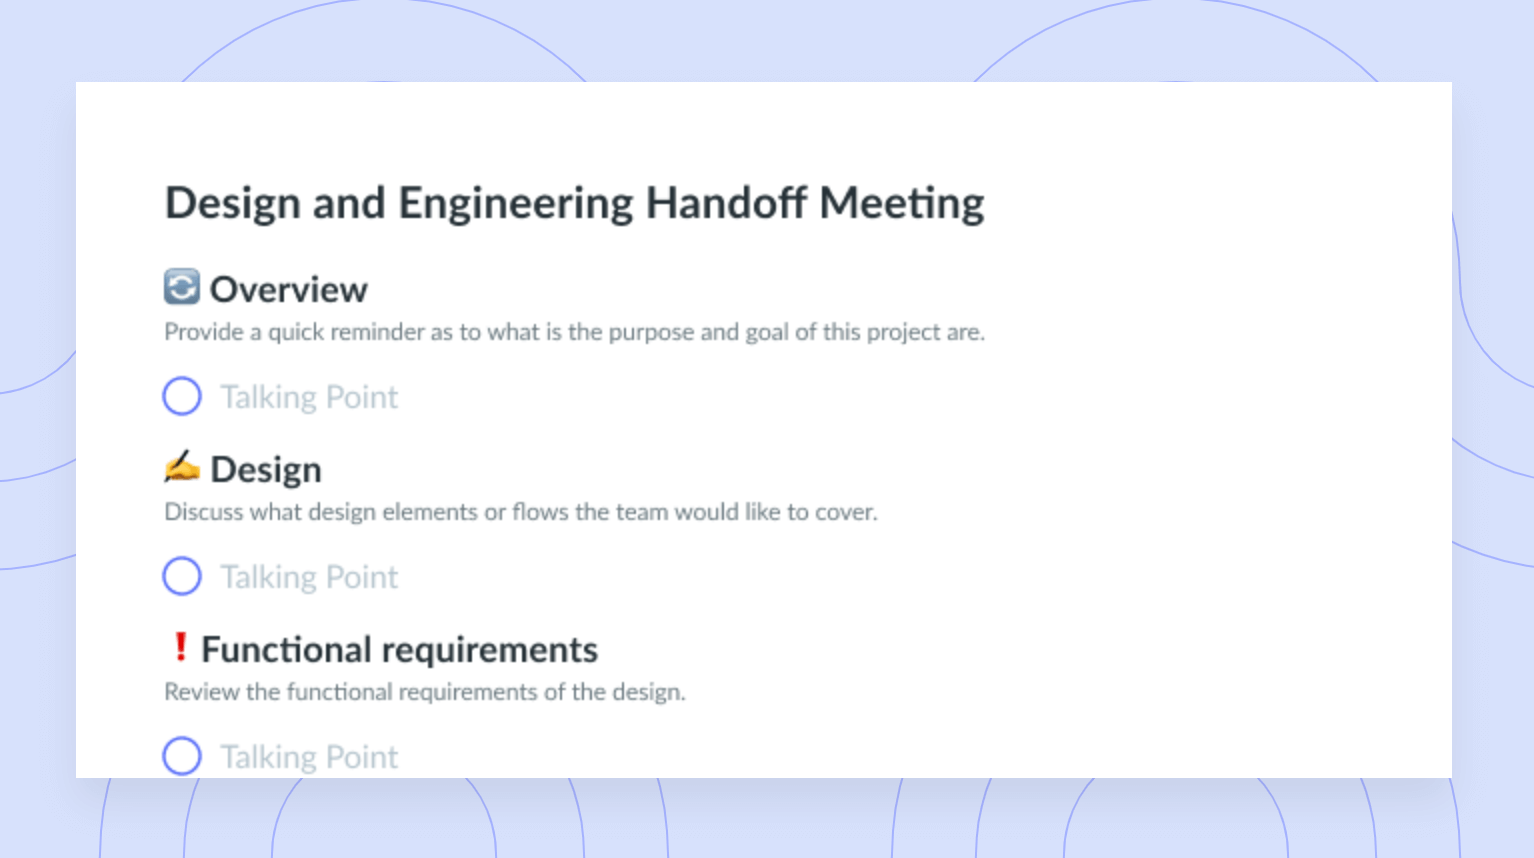 Design and Engineering Handoff Meeting Template